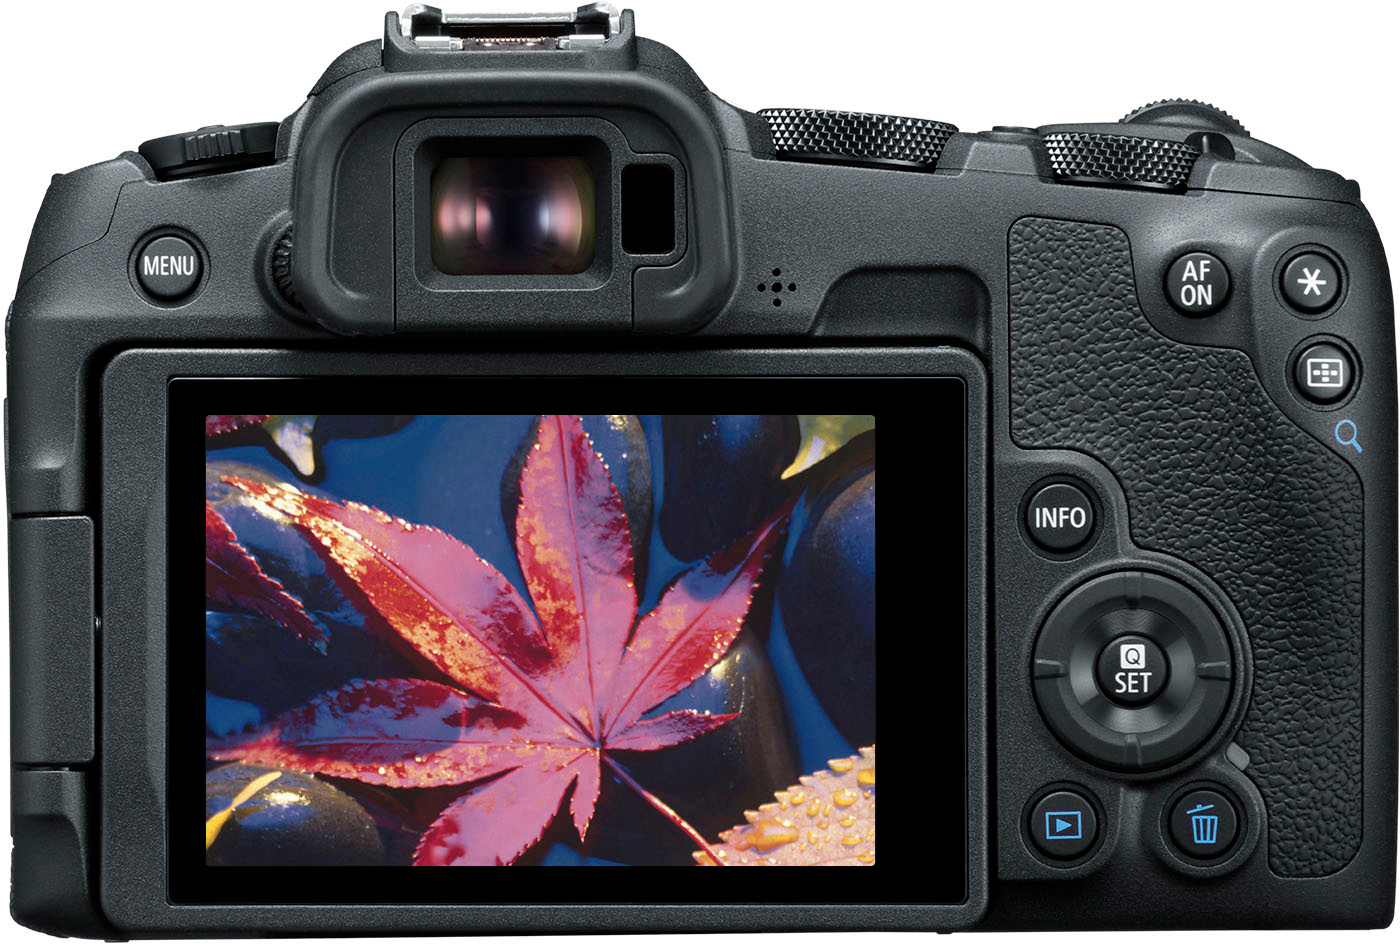 Canon EOS R8 Mirrorless Camera with Essentials Kit 5803C002 EK